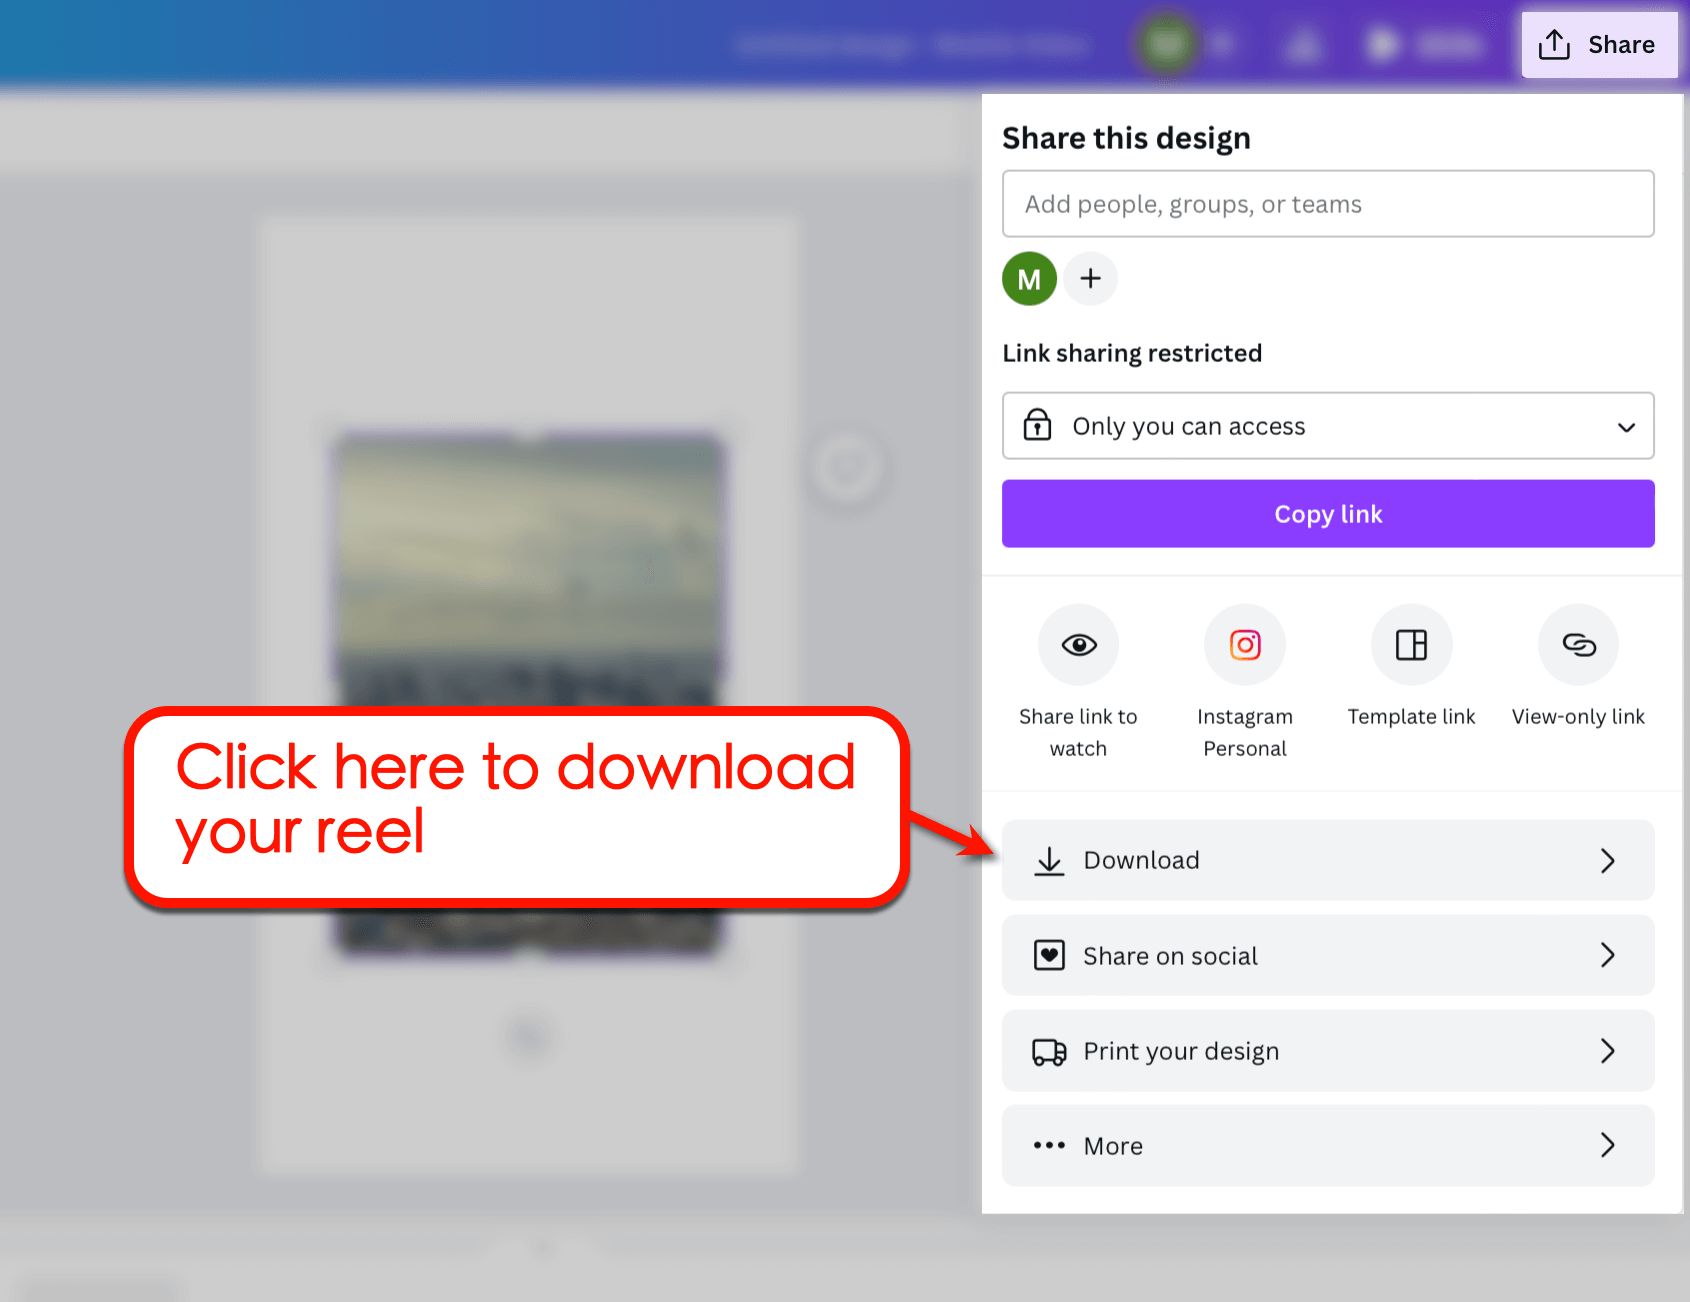 Download your design